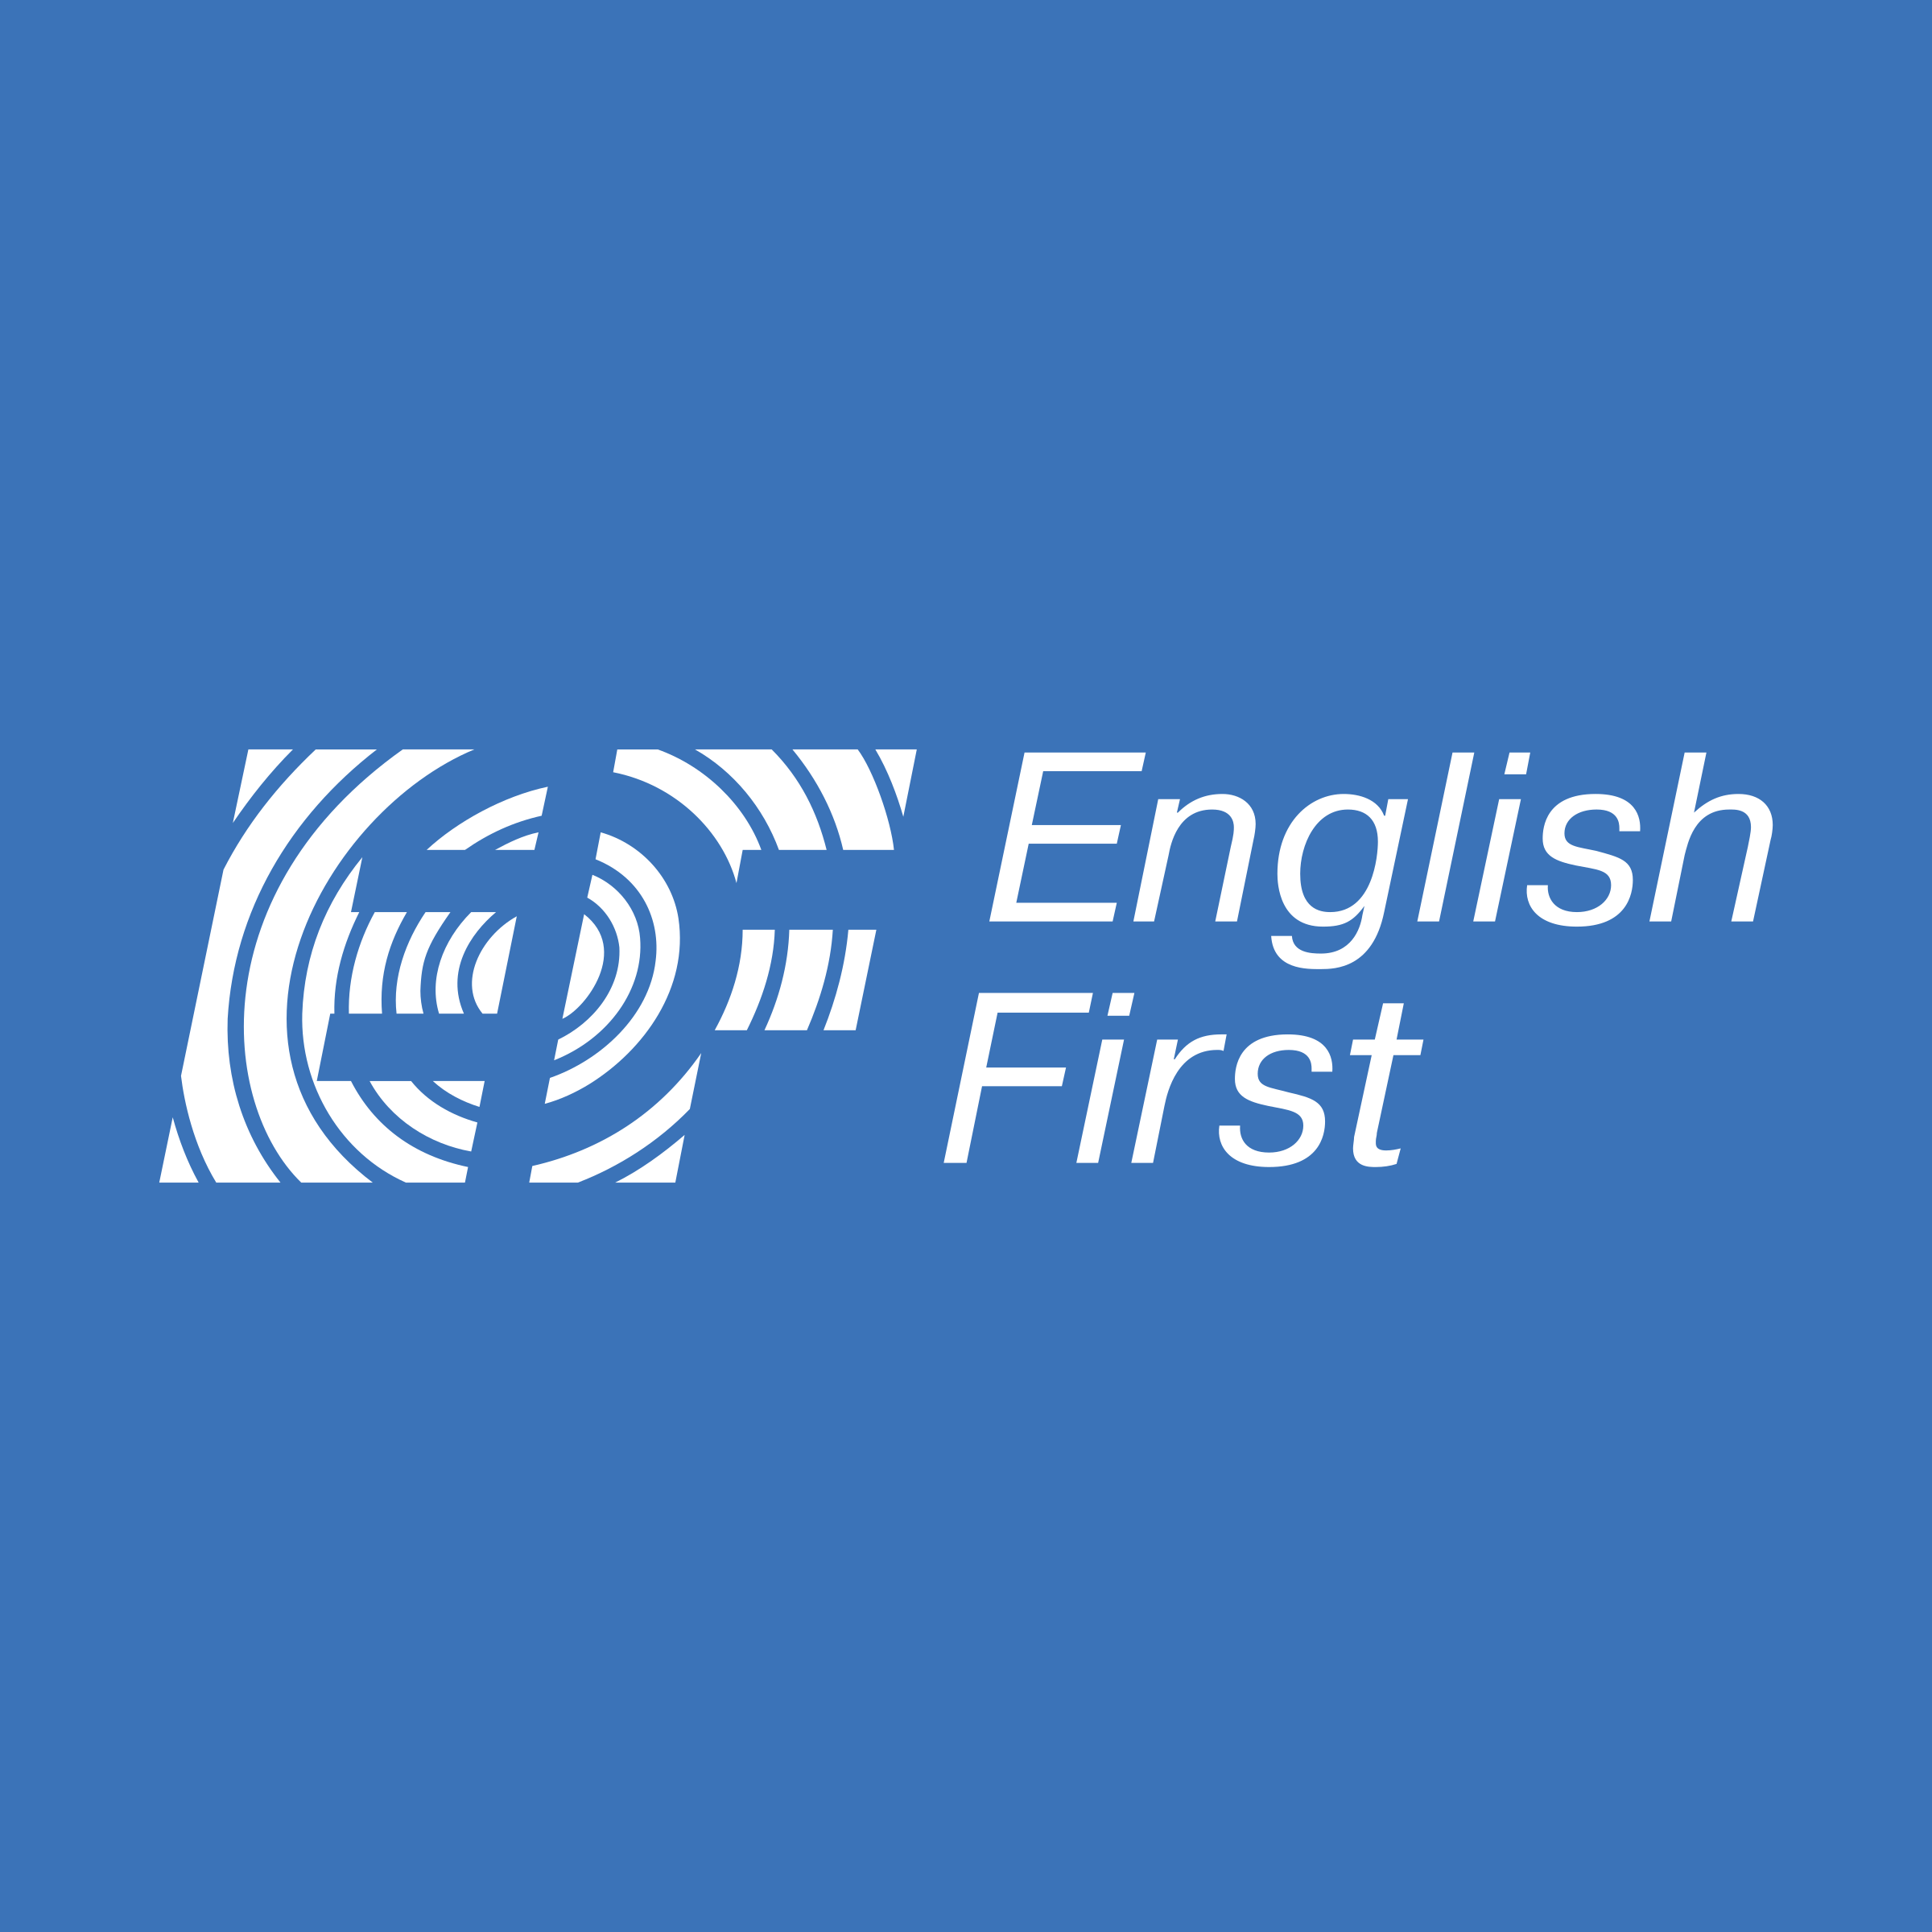 English First Logo Png - KibrisPDR